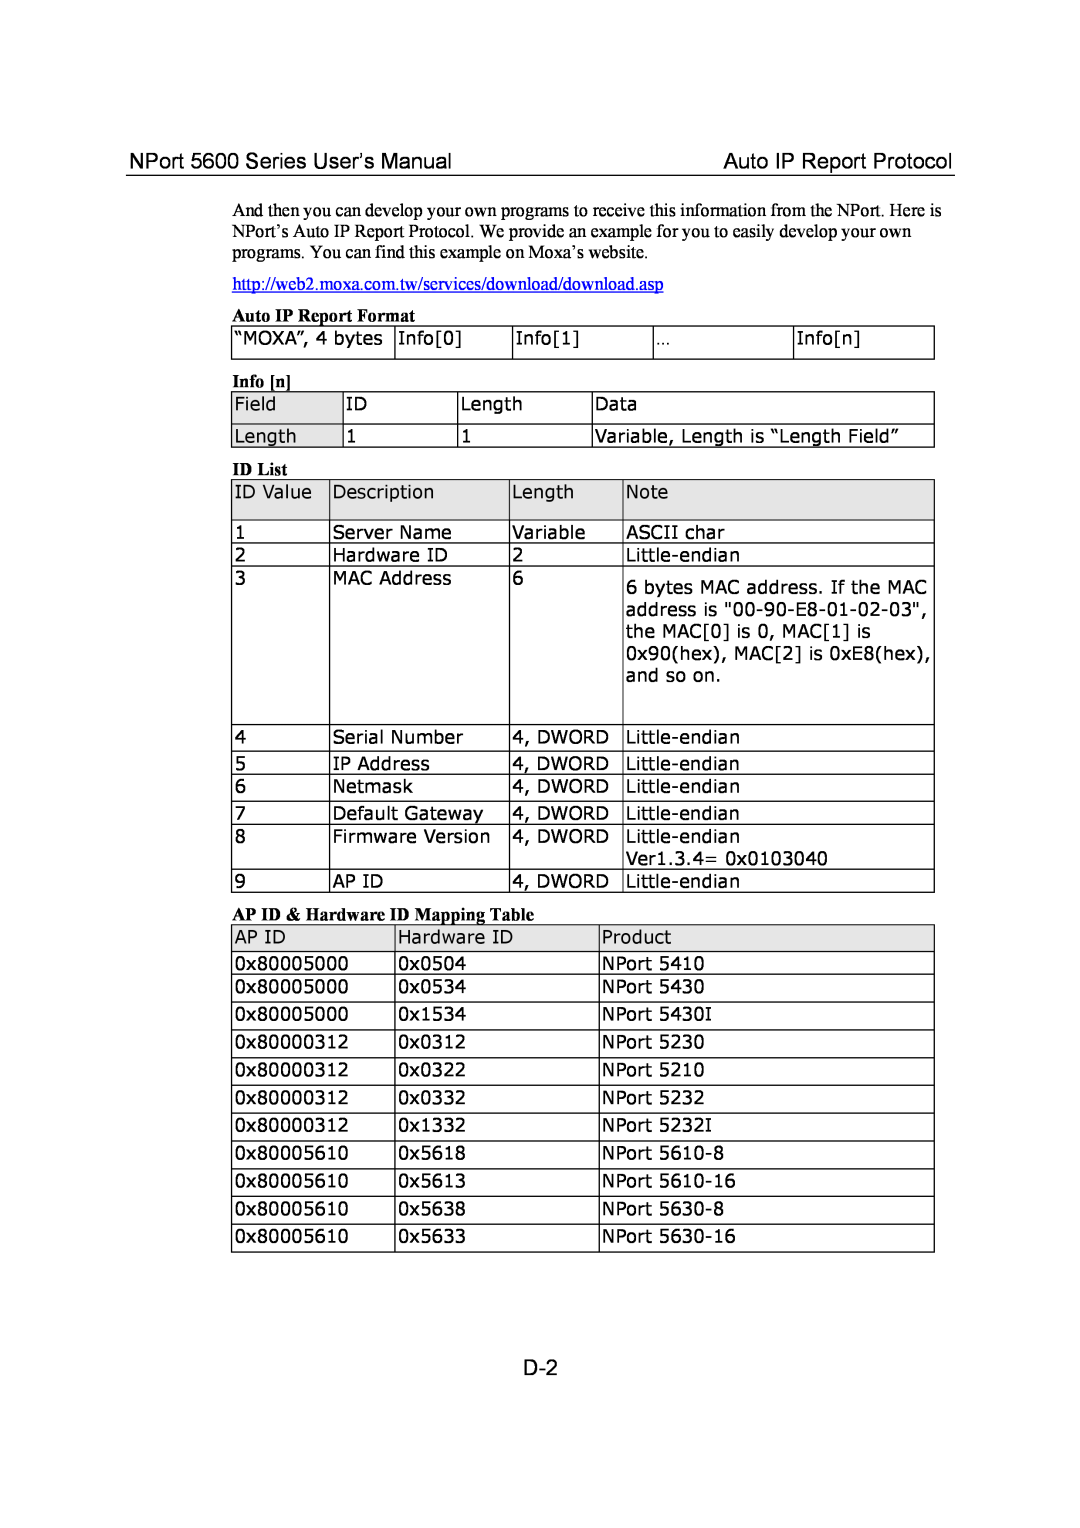 Moxa Technologies Auto IP Report Protocol, NPort 5600 Series User’s Manual, Auto IP Report Format, Info n, ID List 